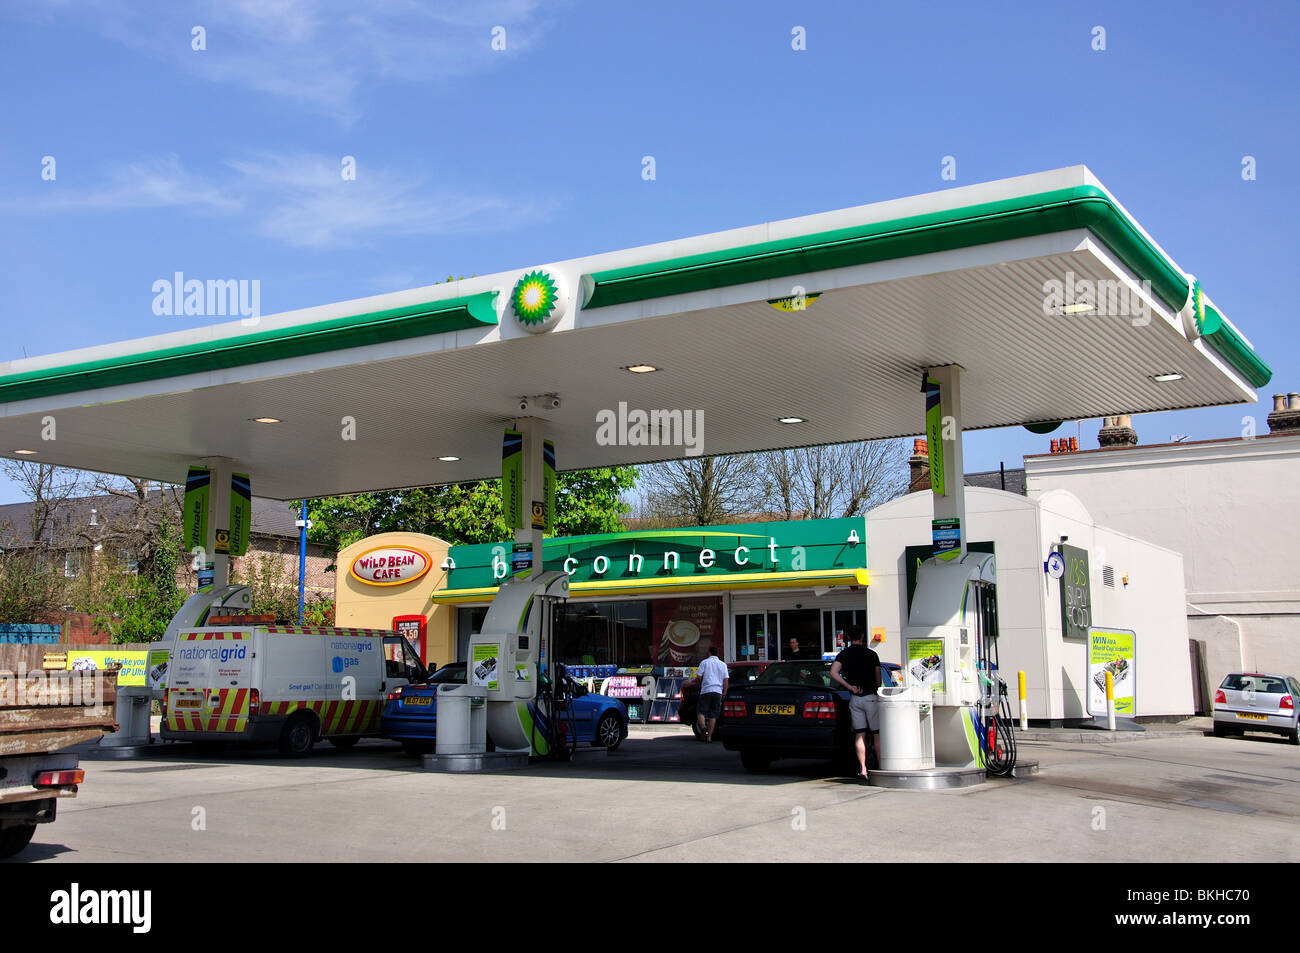 La station essence BP Connect, High Street, Potters Bar, Hertfordshire, Angleterre, Royaume-Uni Banque D'Images